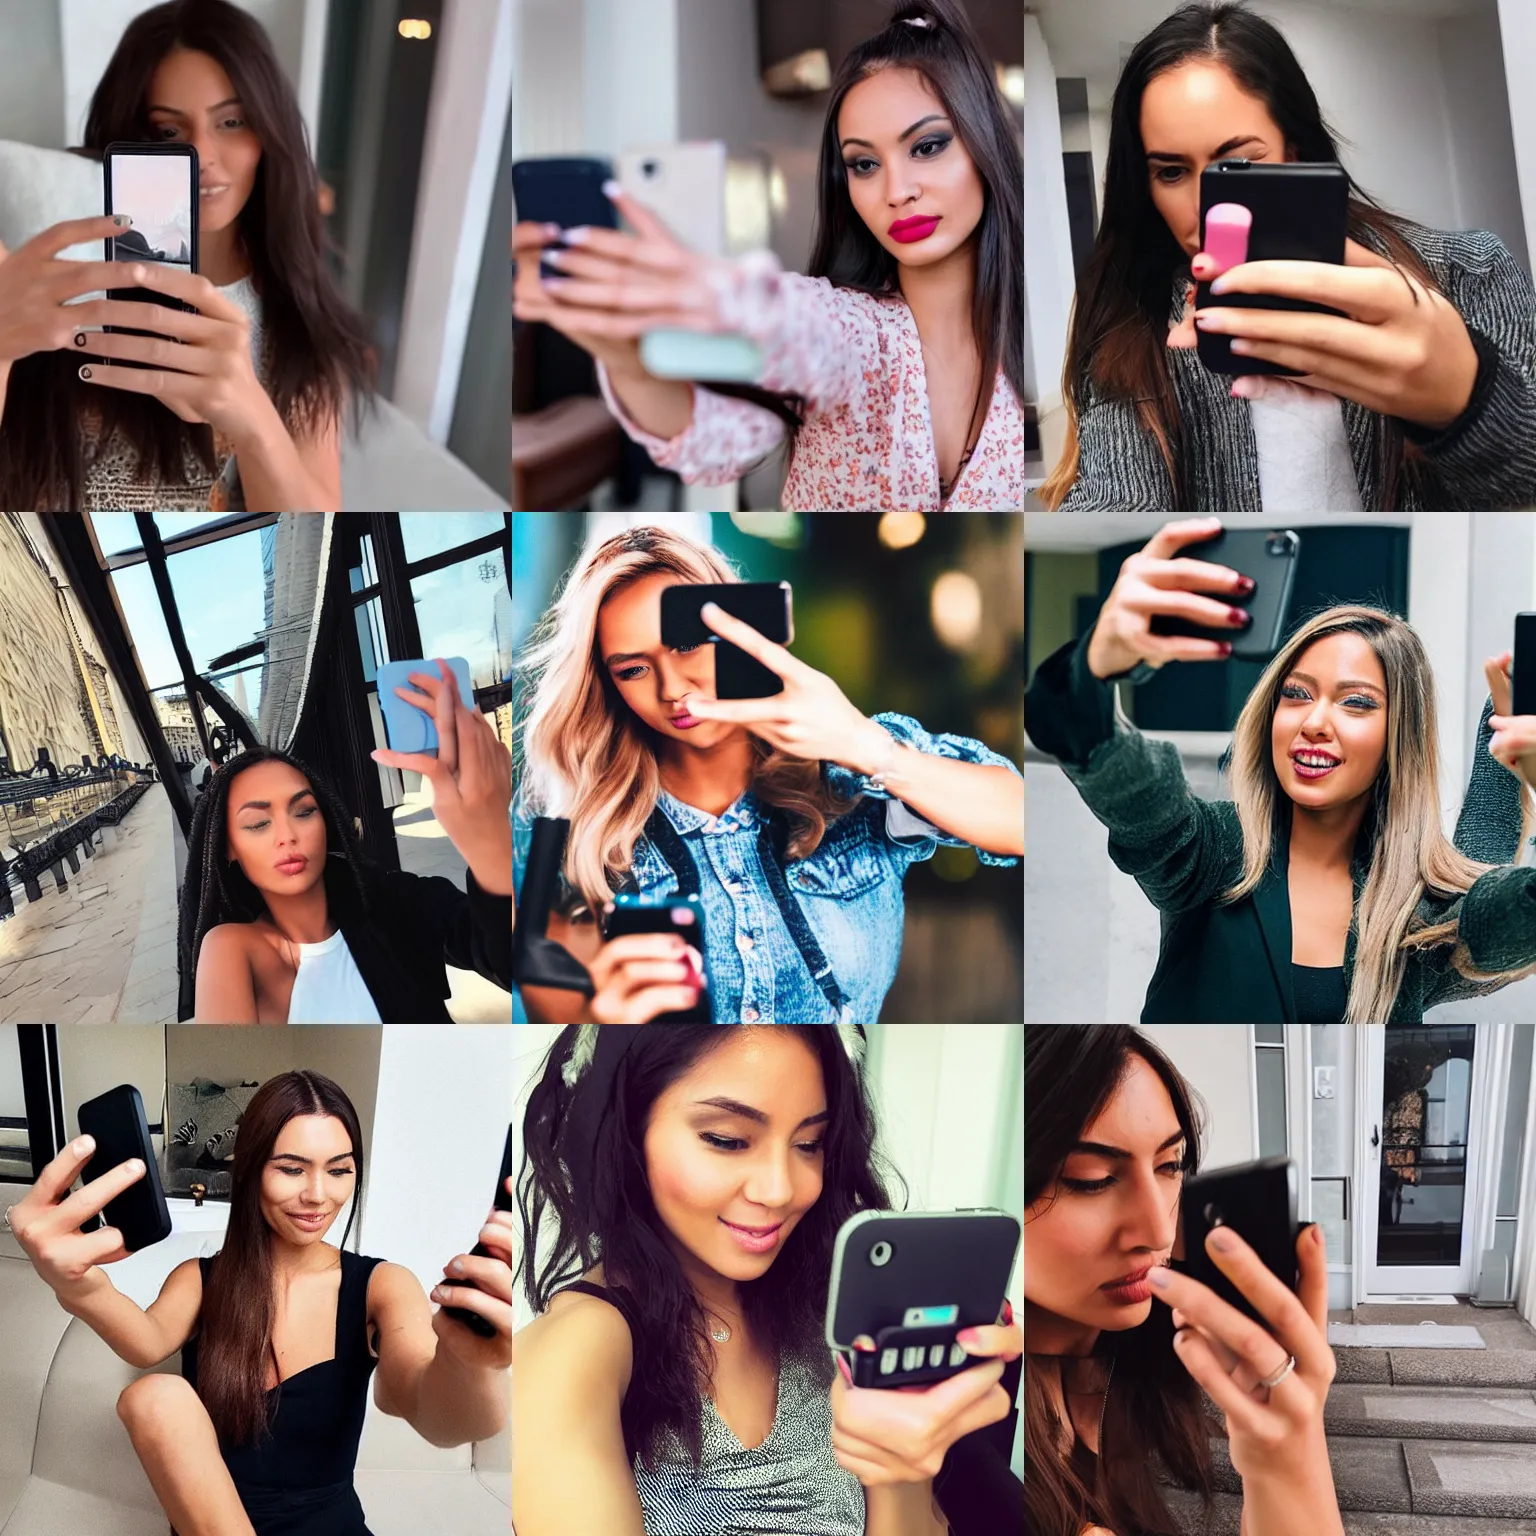 Prompt: A female instagram influencer taking a selfie